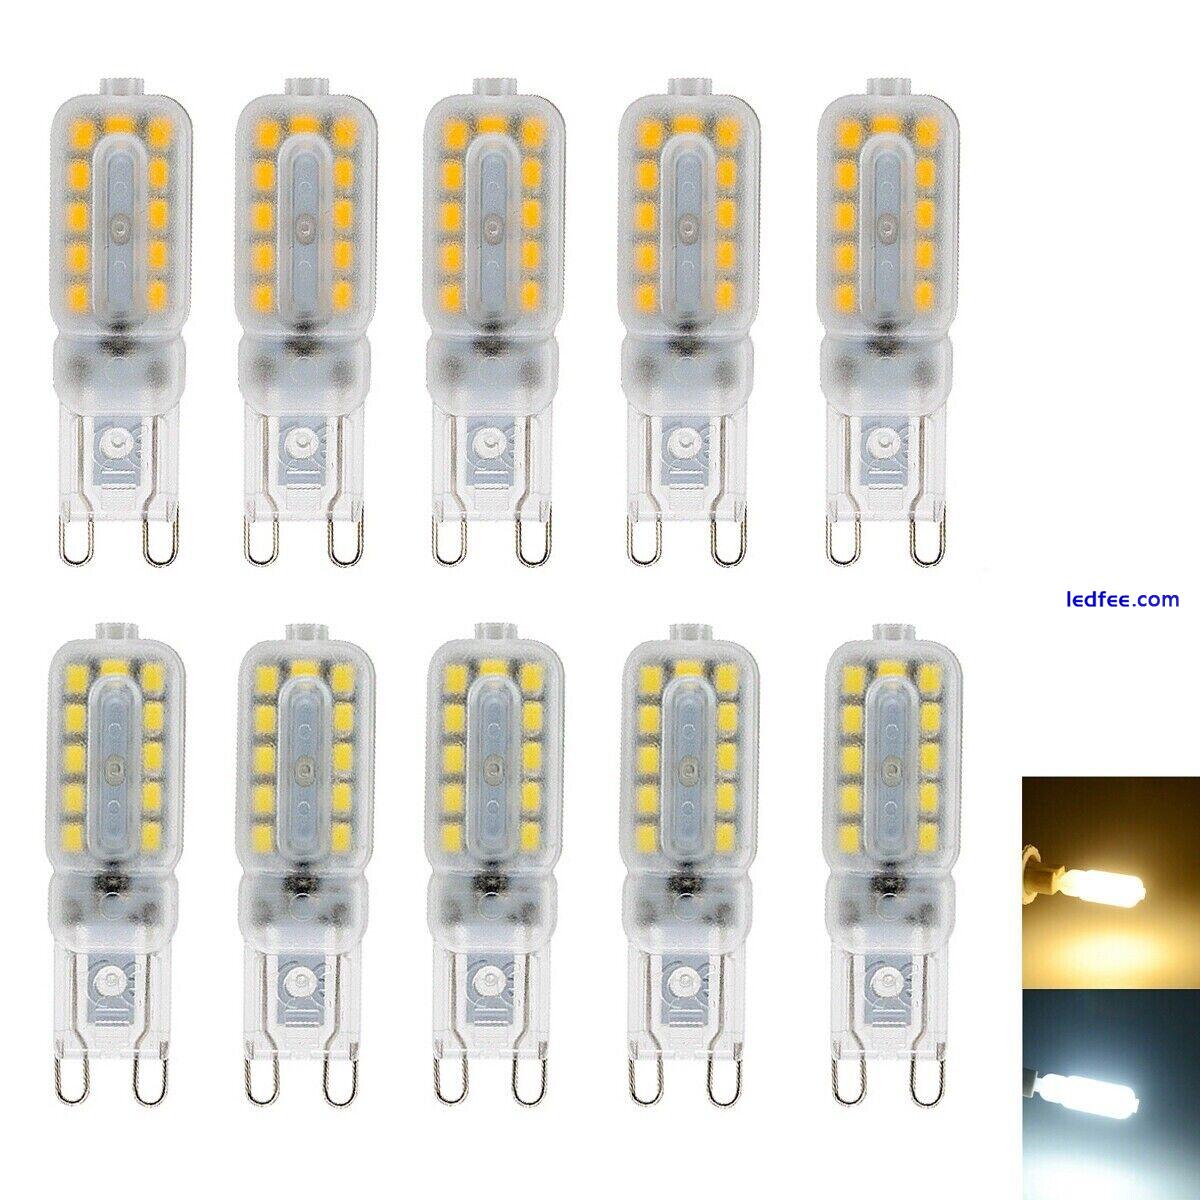 G4,G9,E14 LEDLight Bulb COOL, WARM WHITE Replacement For Halogen Capsule Bulbs 0 